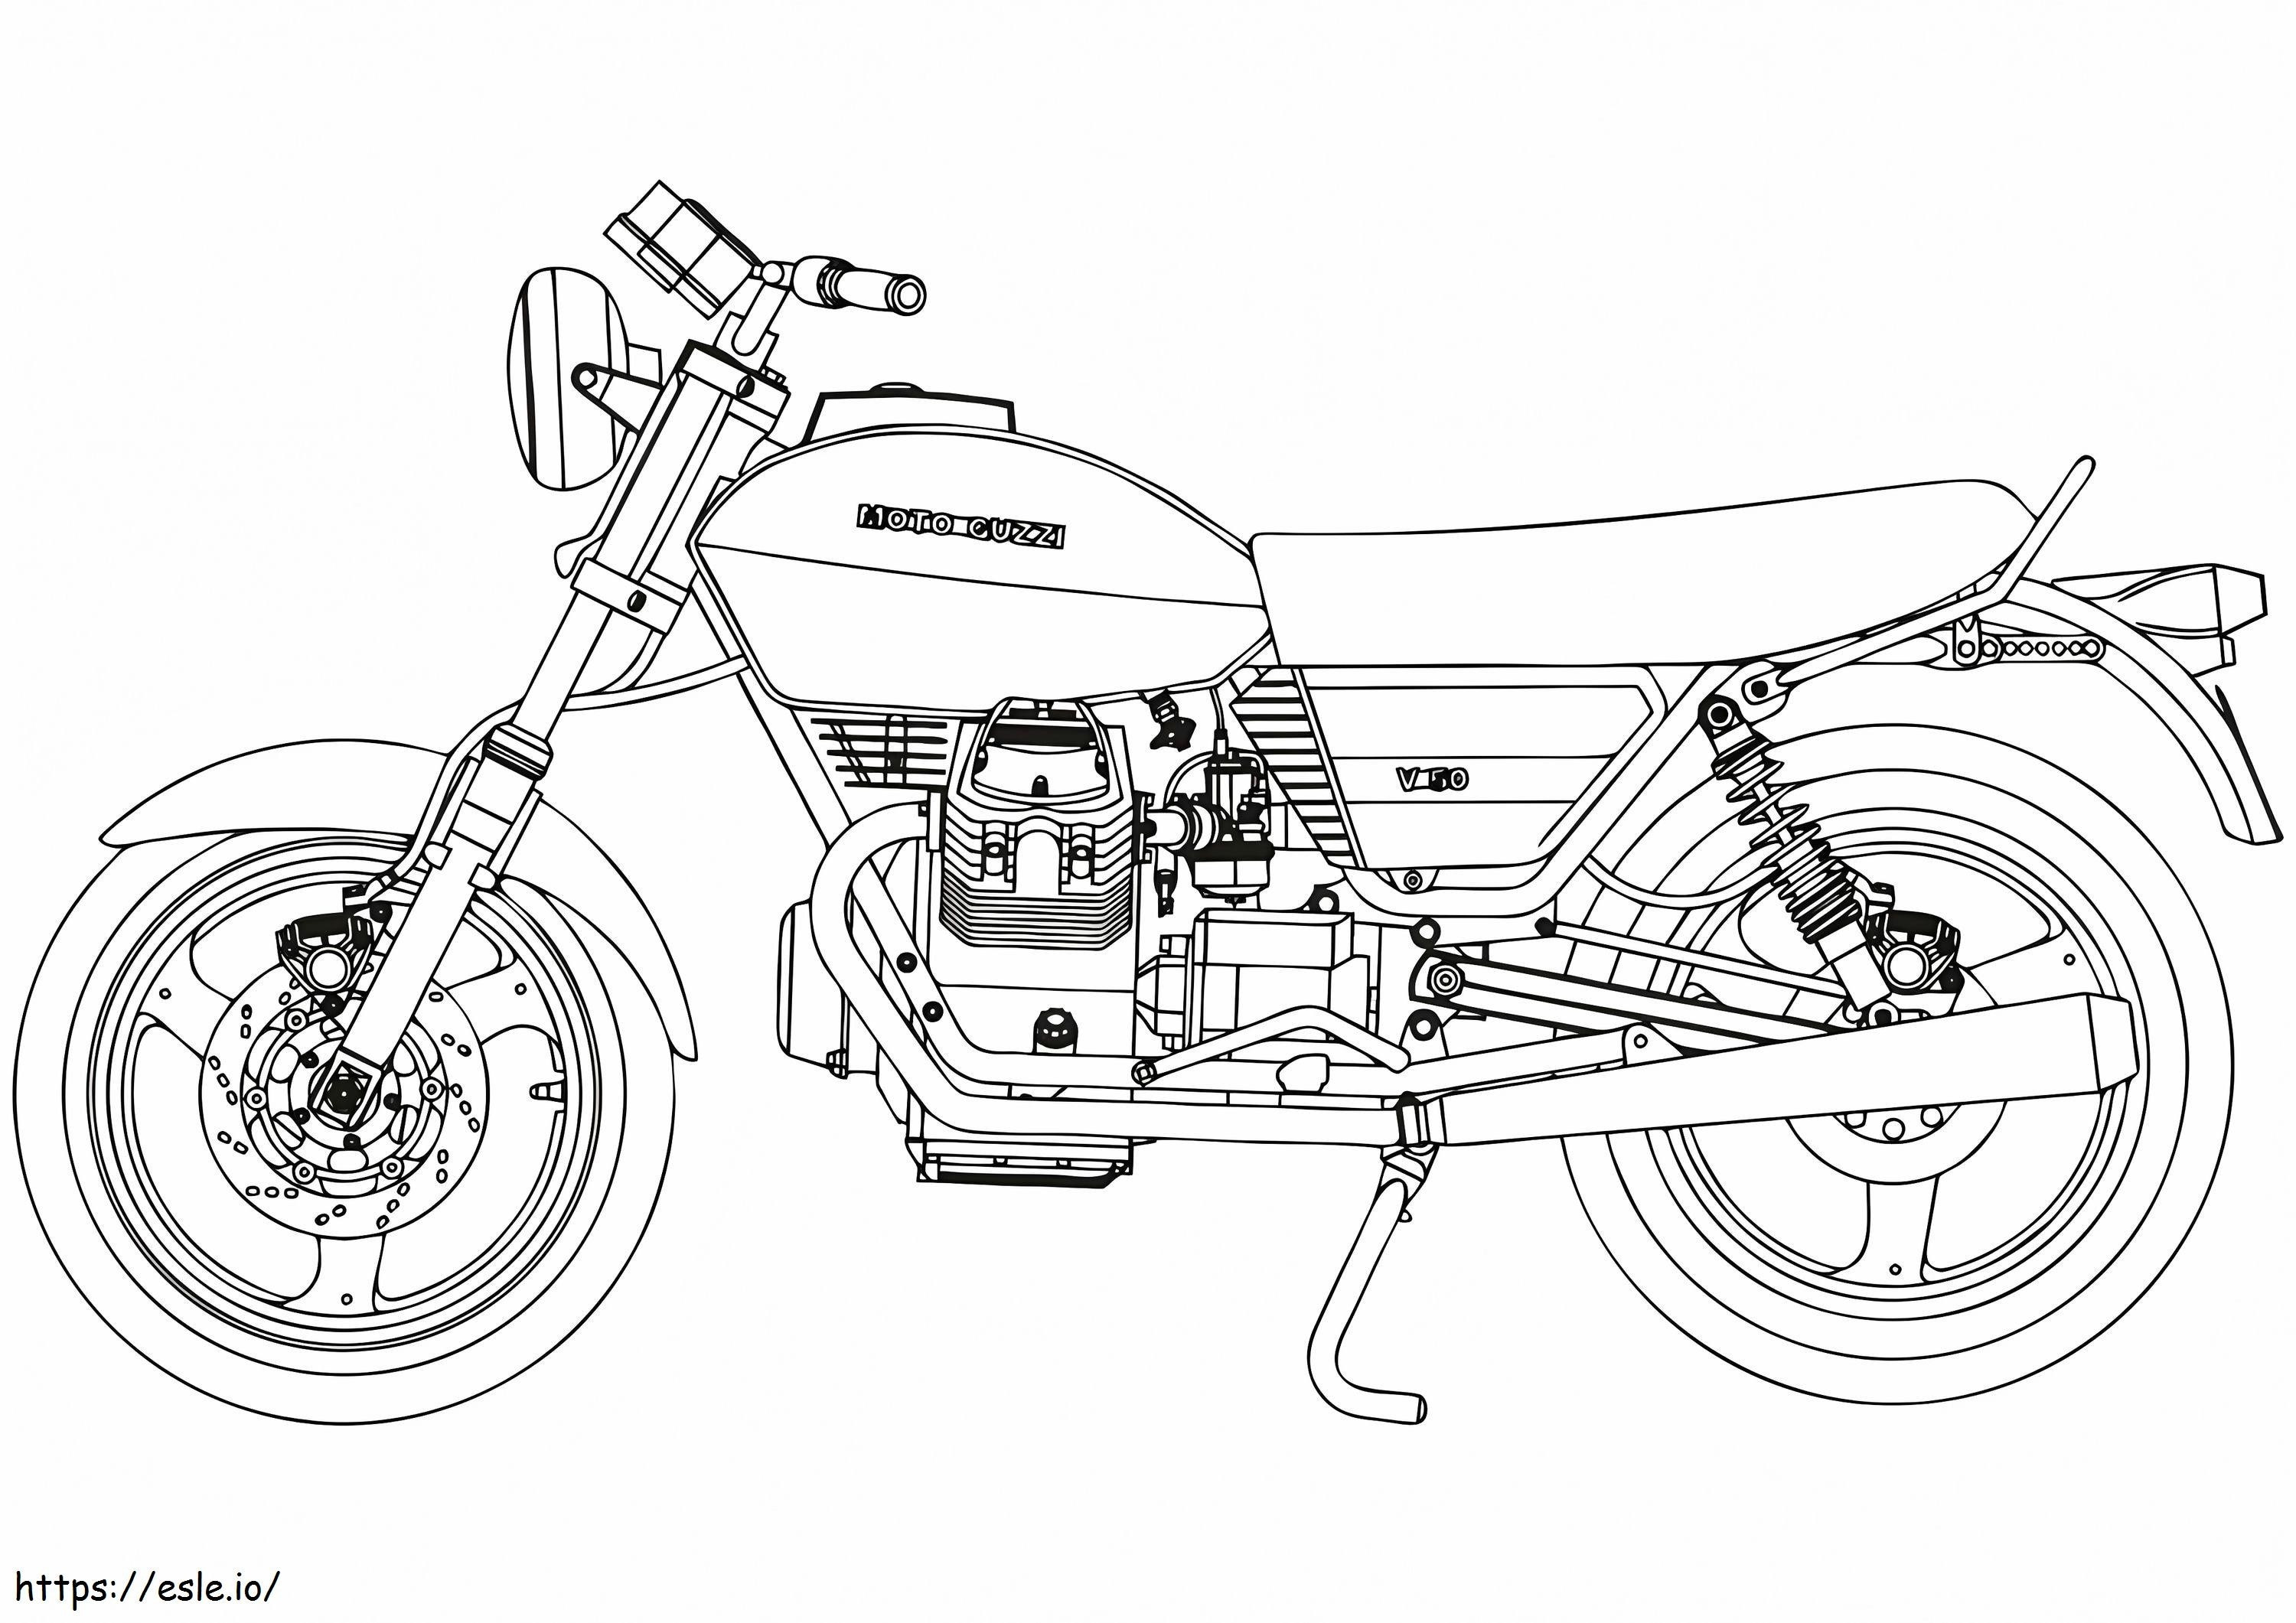 Moto Guzzi V 50 1024X724 coloring page